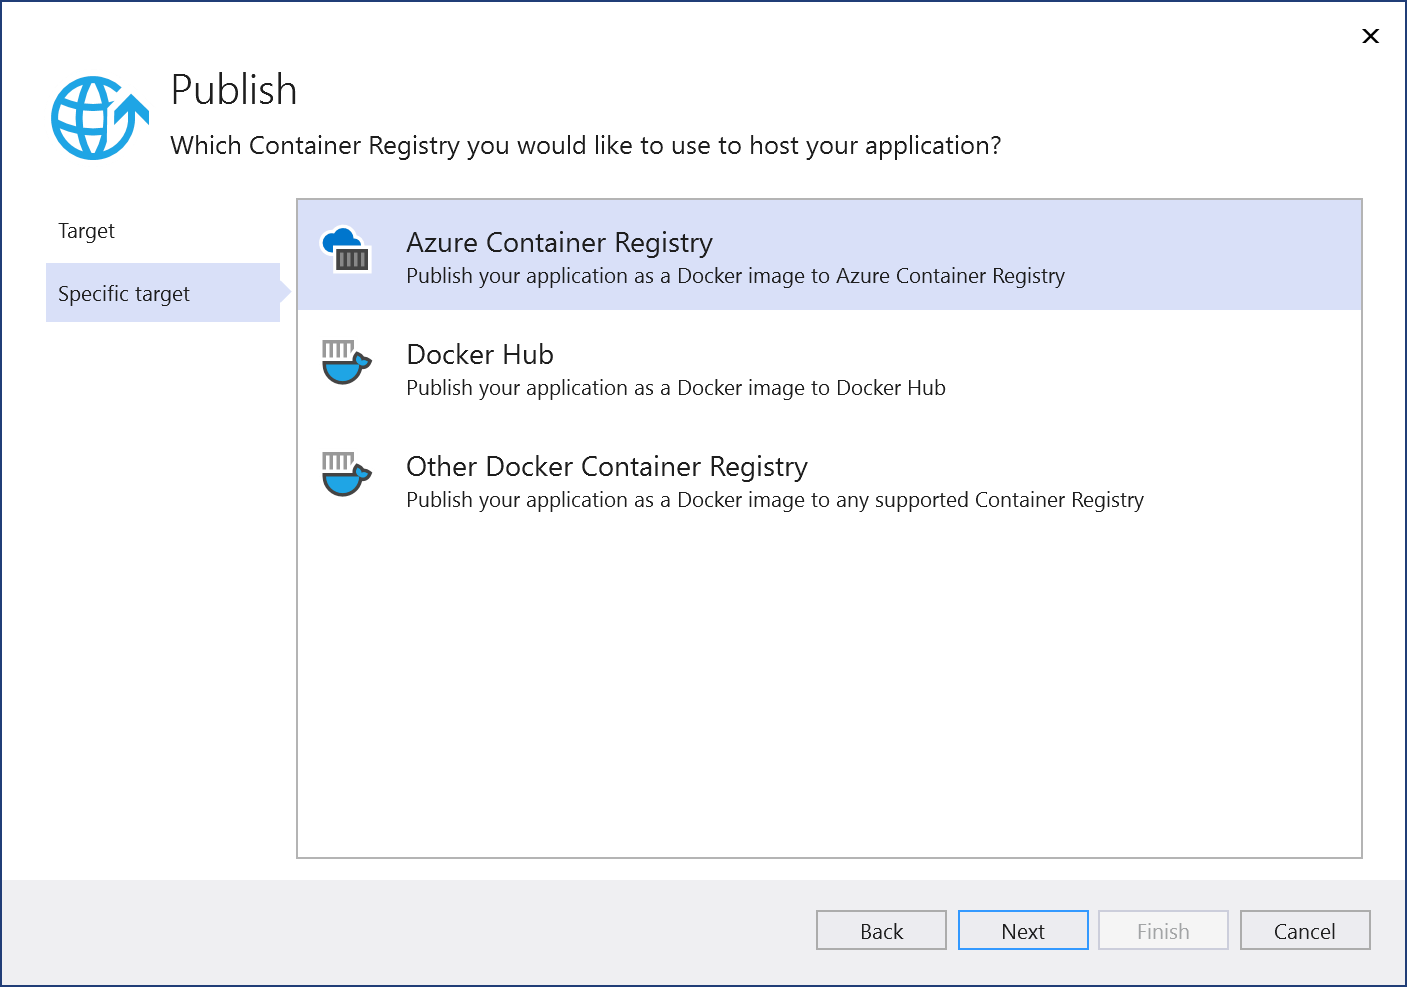 Choose Azure Container Registry.